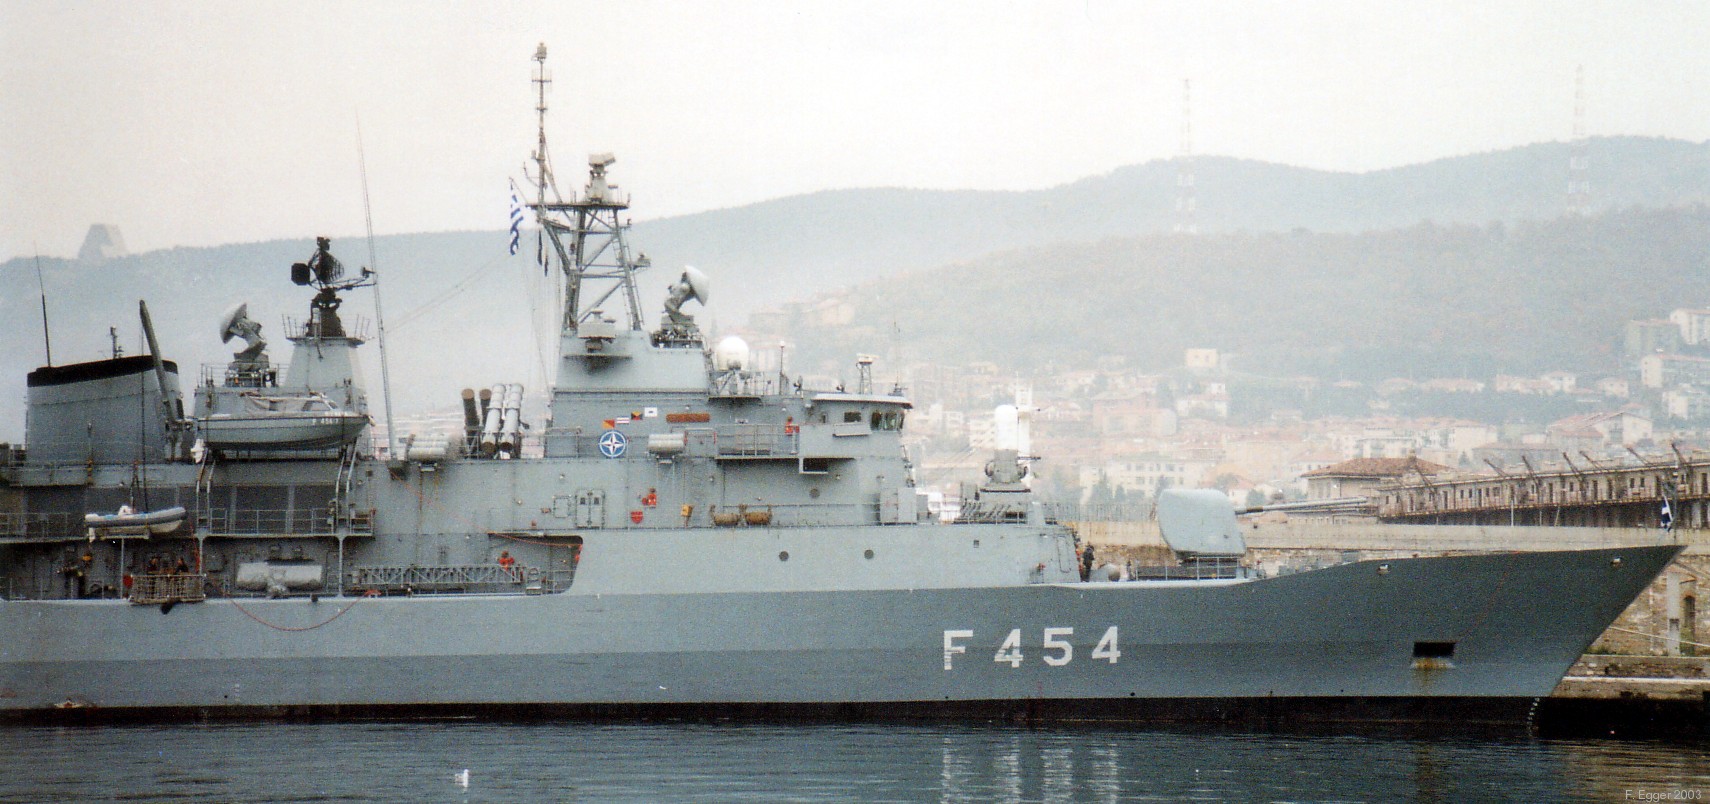 f 454 hs psara hydra class frigate meko-200hn hellenic navy greece nato standing naval force mediterranean stanavformed trieste italy 2003 10